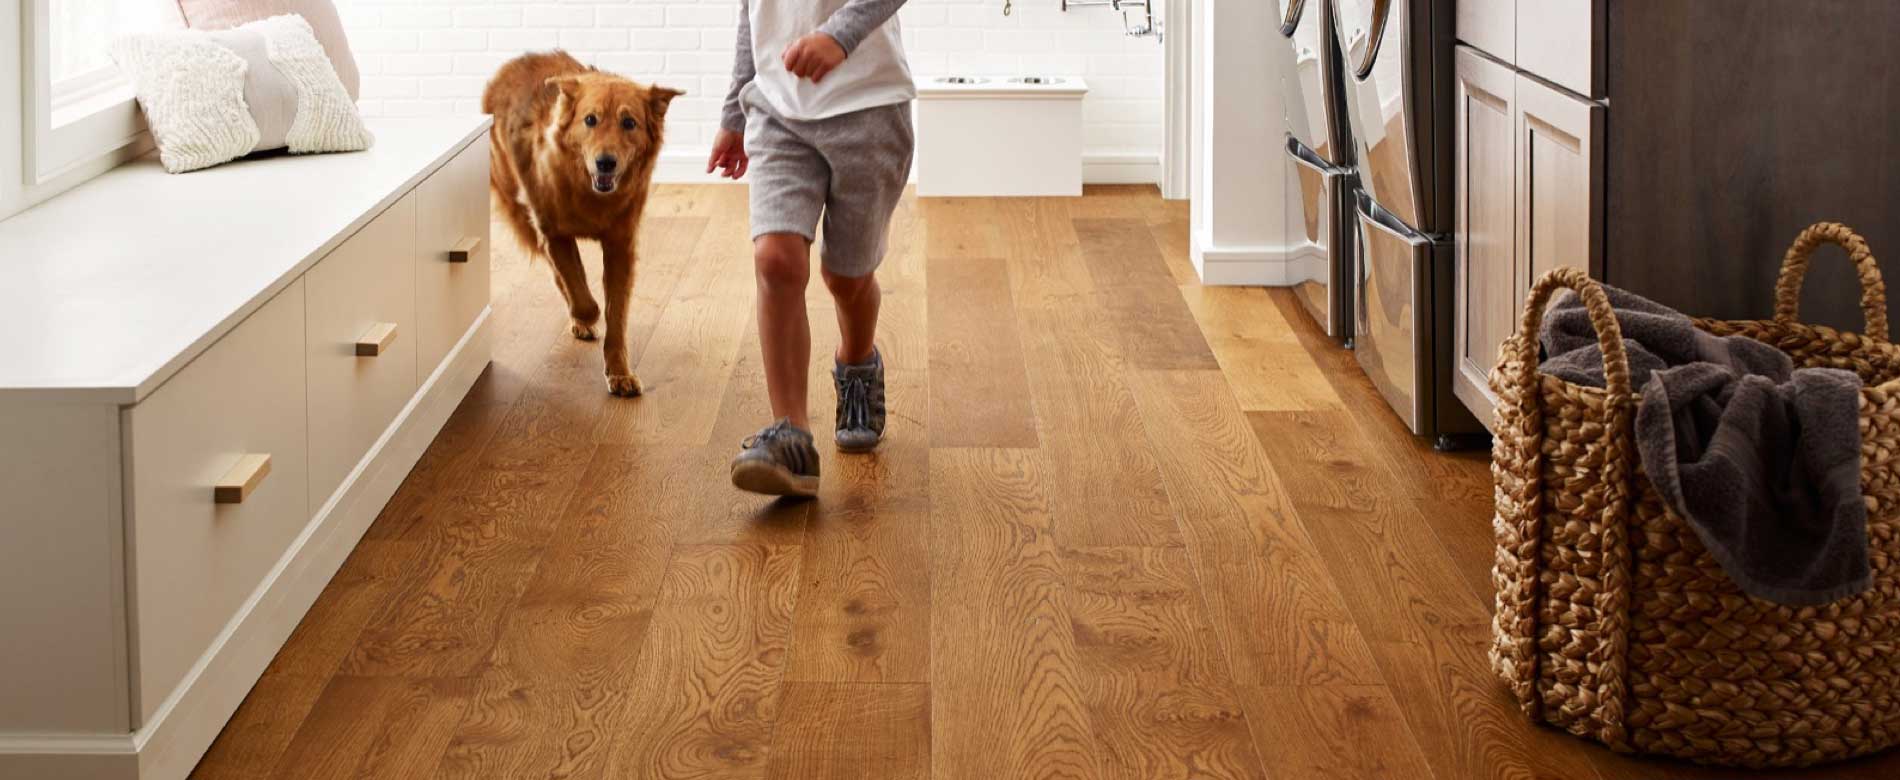 Dog running on hardwood flooring | Haley's Flooring, Kitchen & Bath